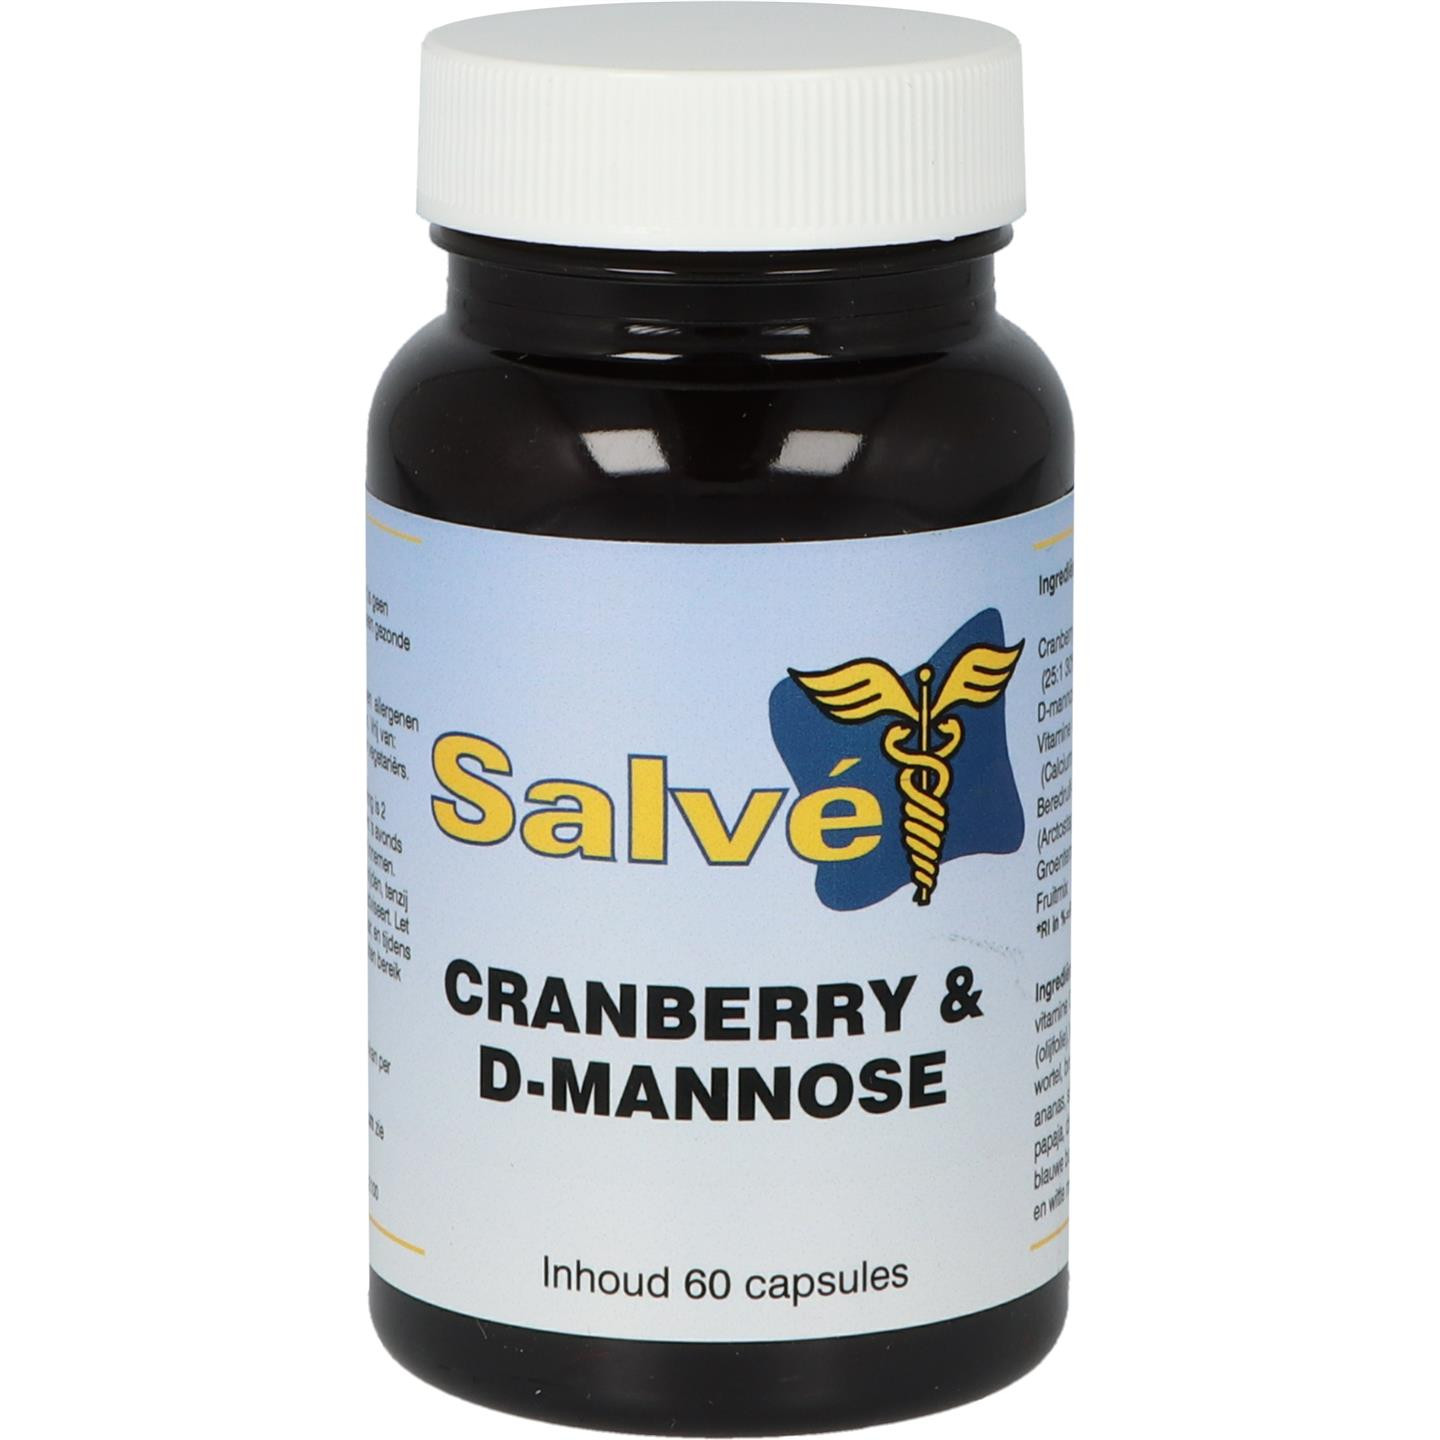 Cranberry & D-Mannose